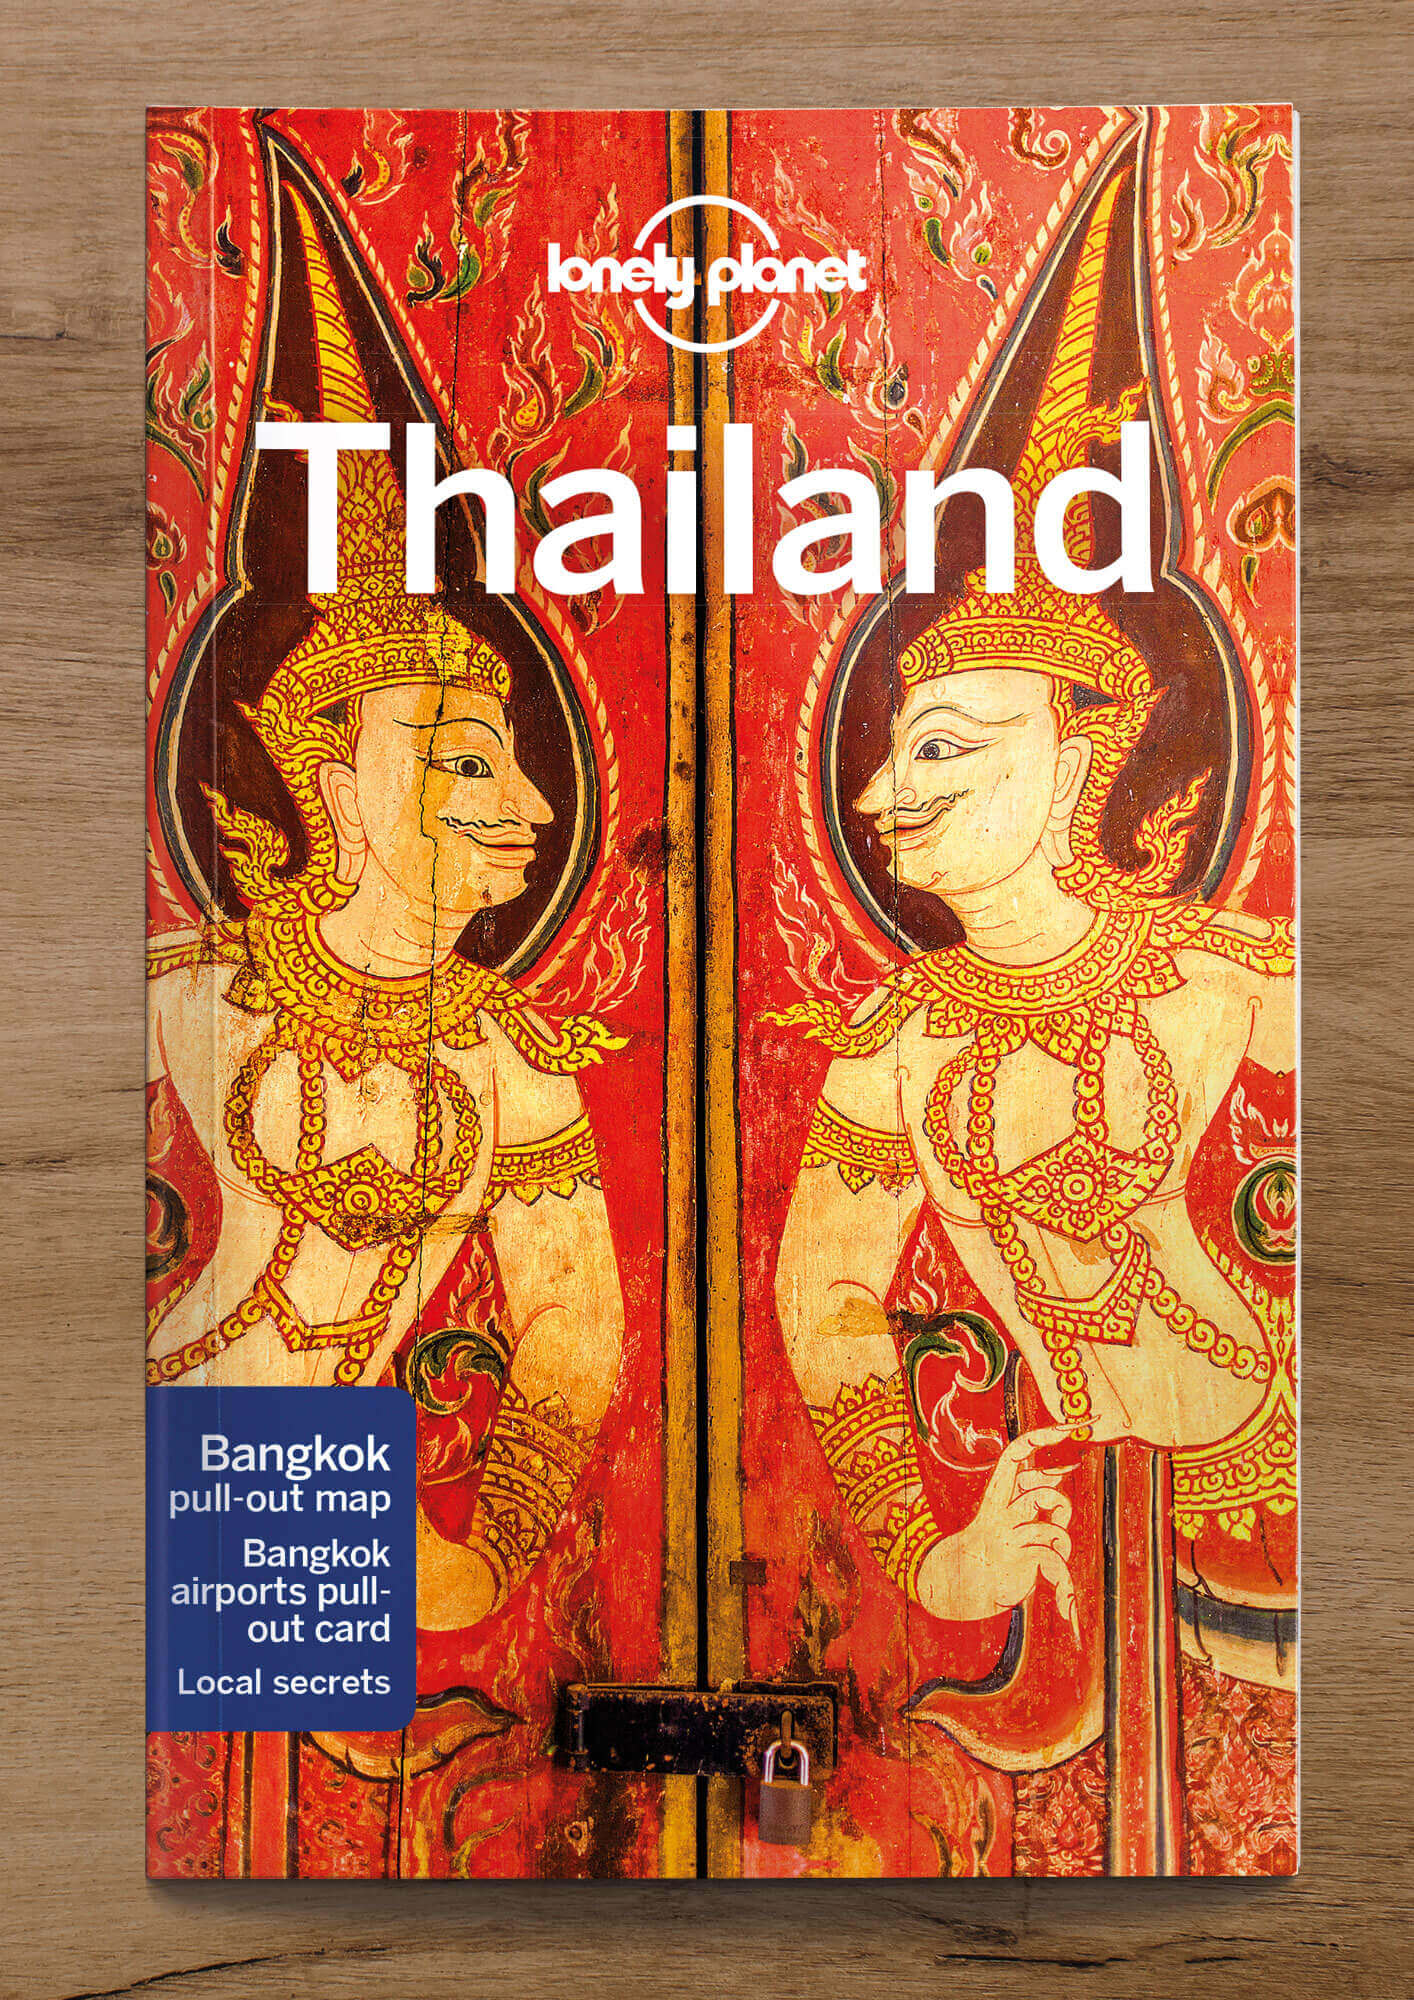  Bestselling Lonelyplanet ebook bundle - Thailand